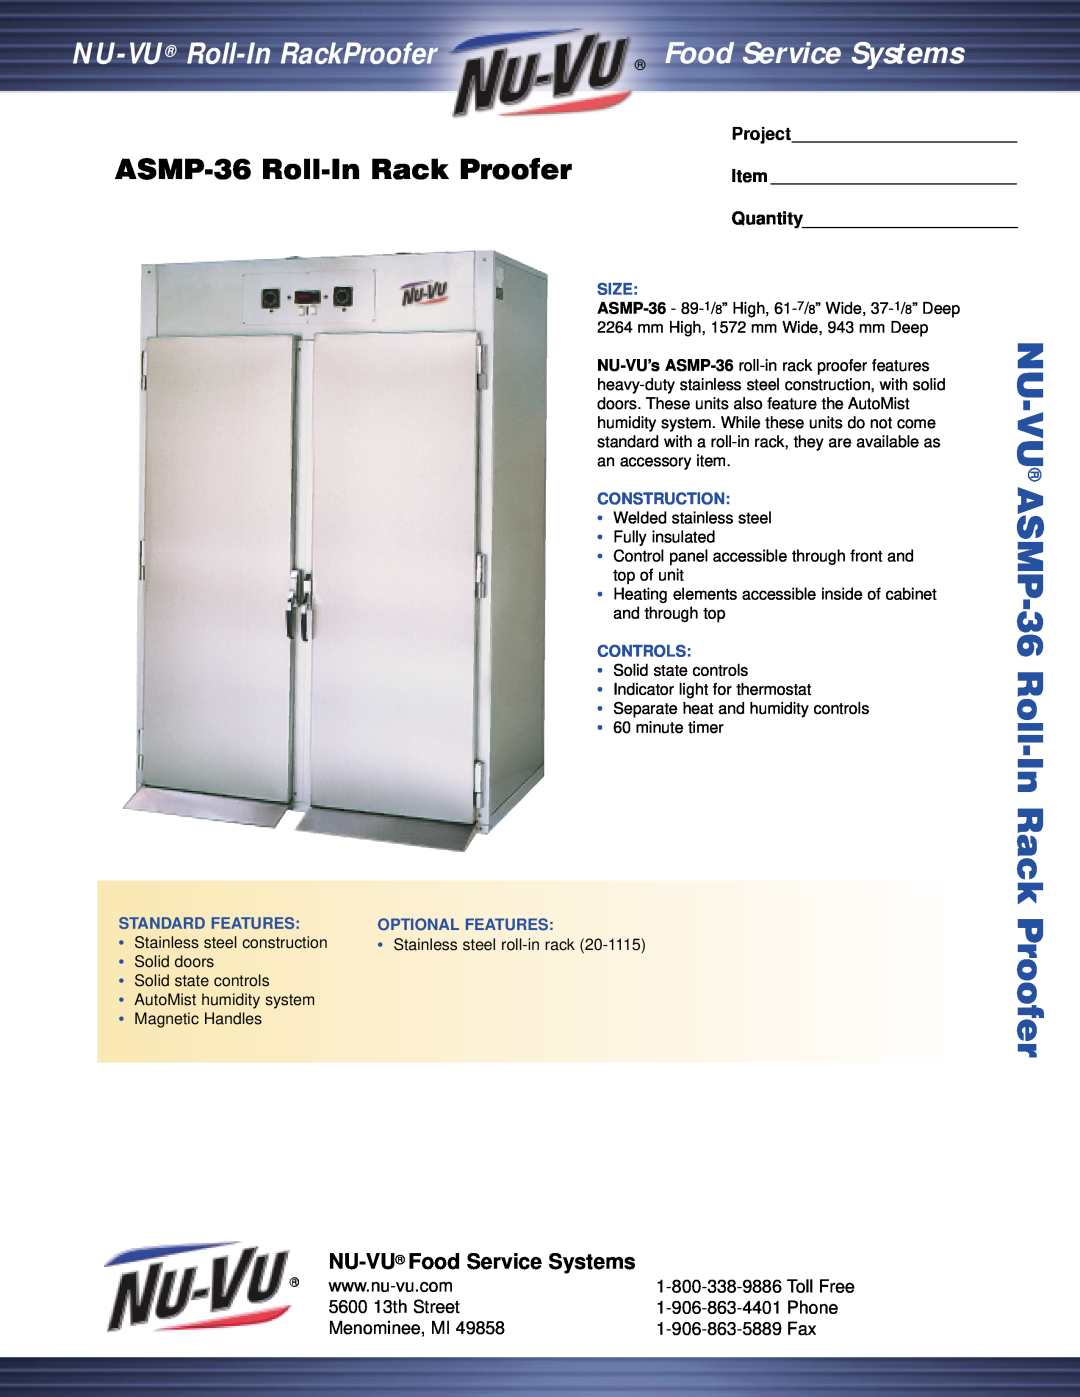 Nu-Vu manual ASMP-36 Roll-InRack Proofer, NU-VU Food Service Systems, 5600 13th Street, Phone, Menominee, MI, Project 